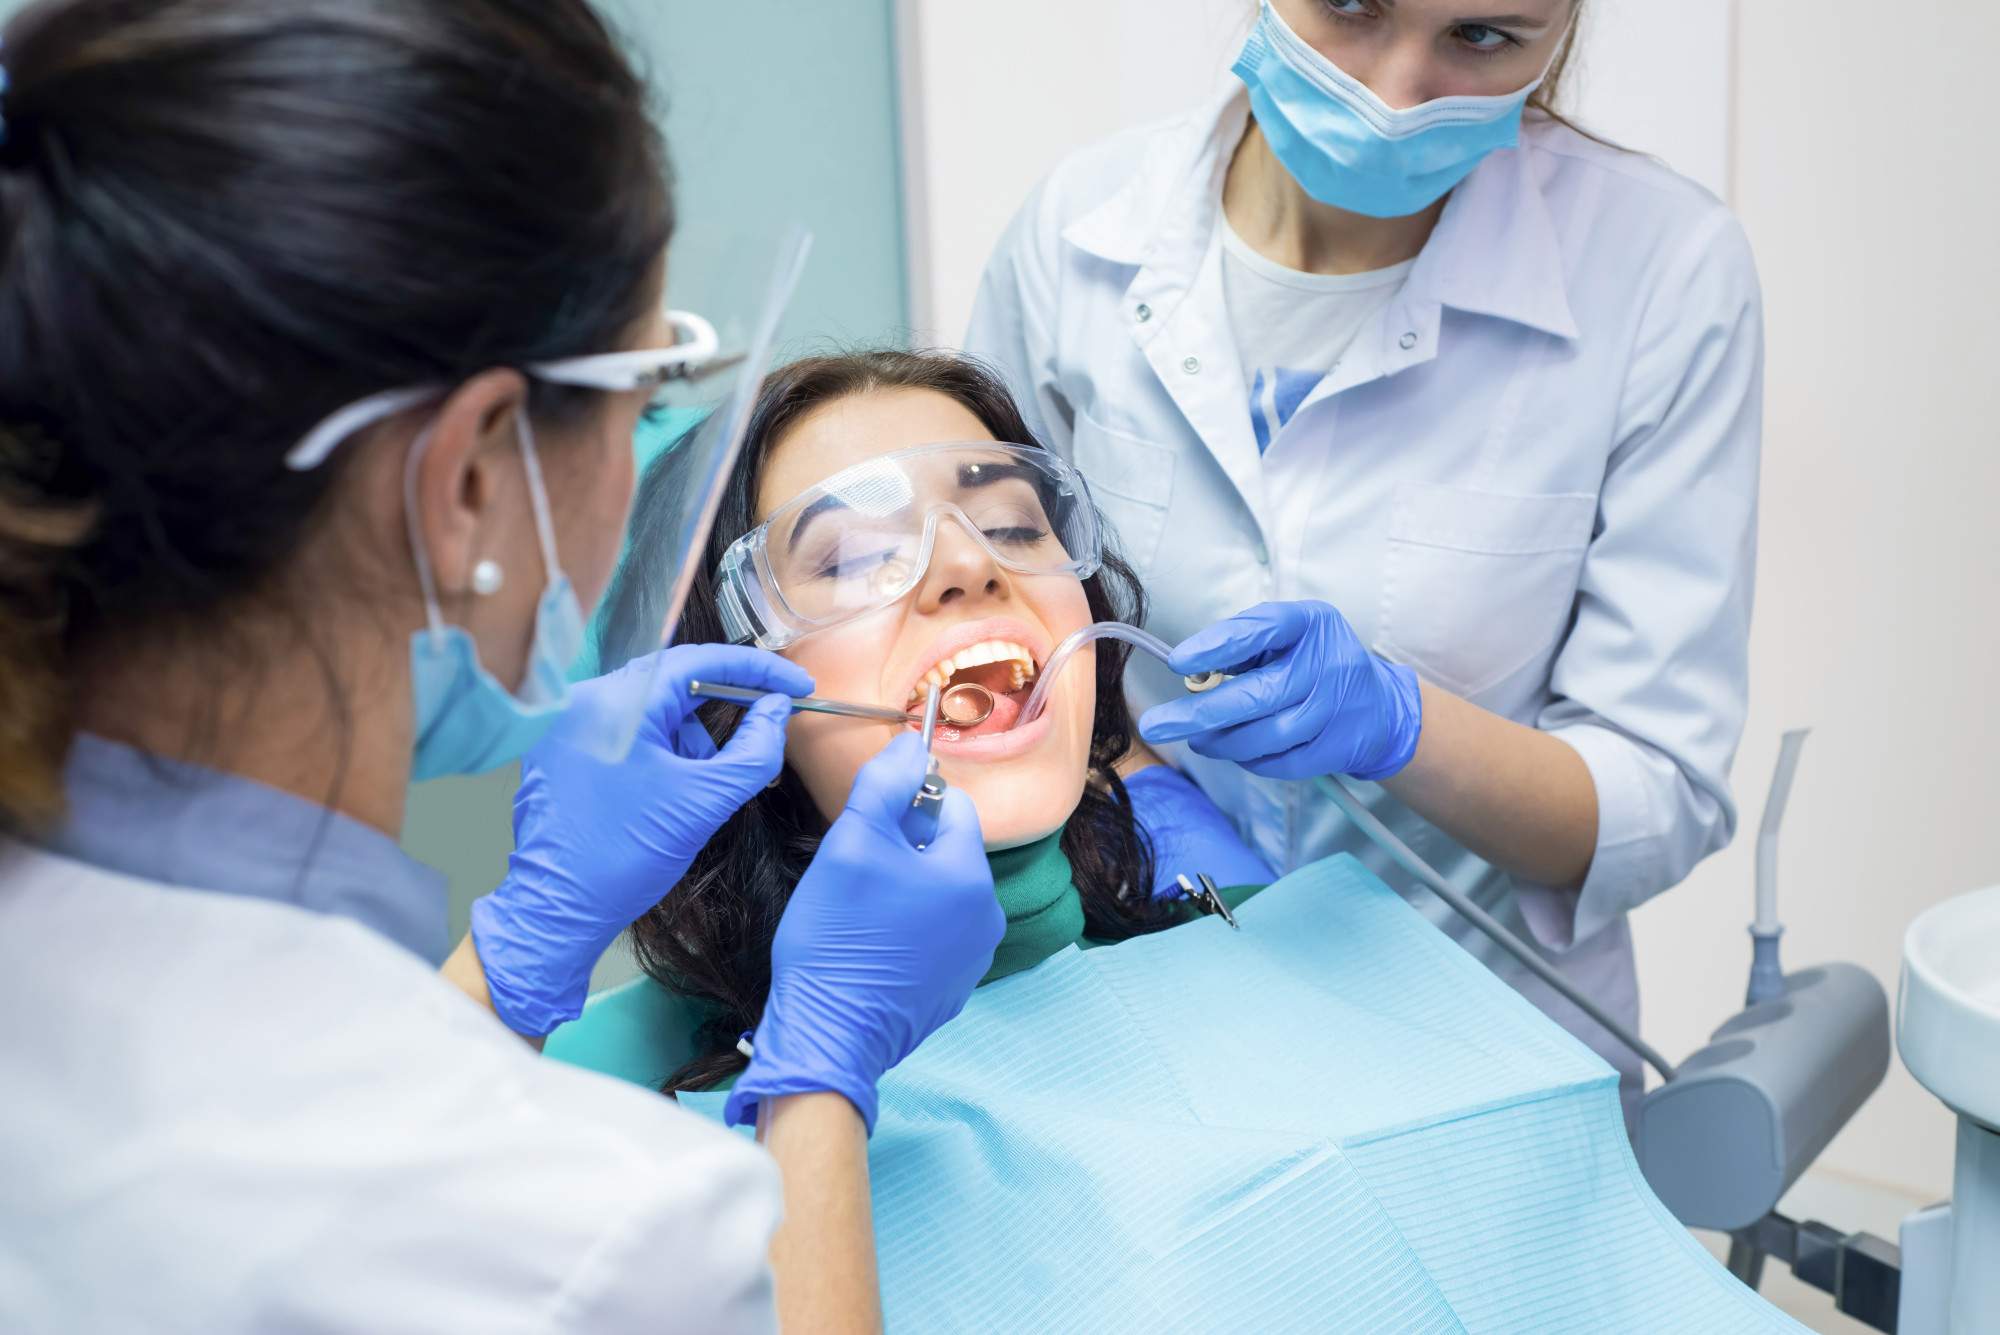 5 of the Most Popular Dental Procedures